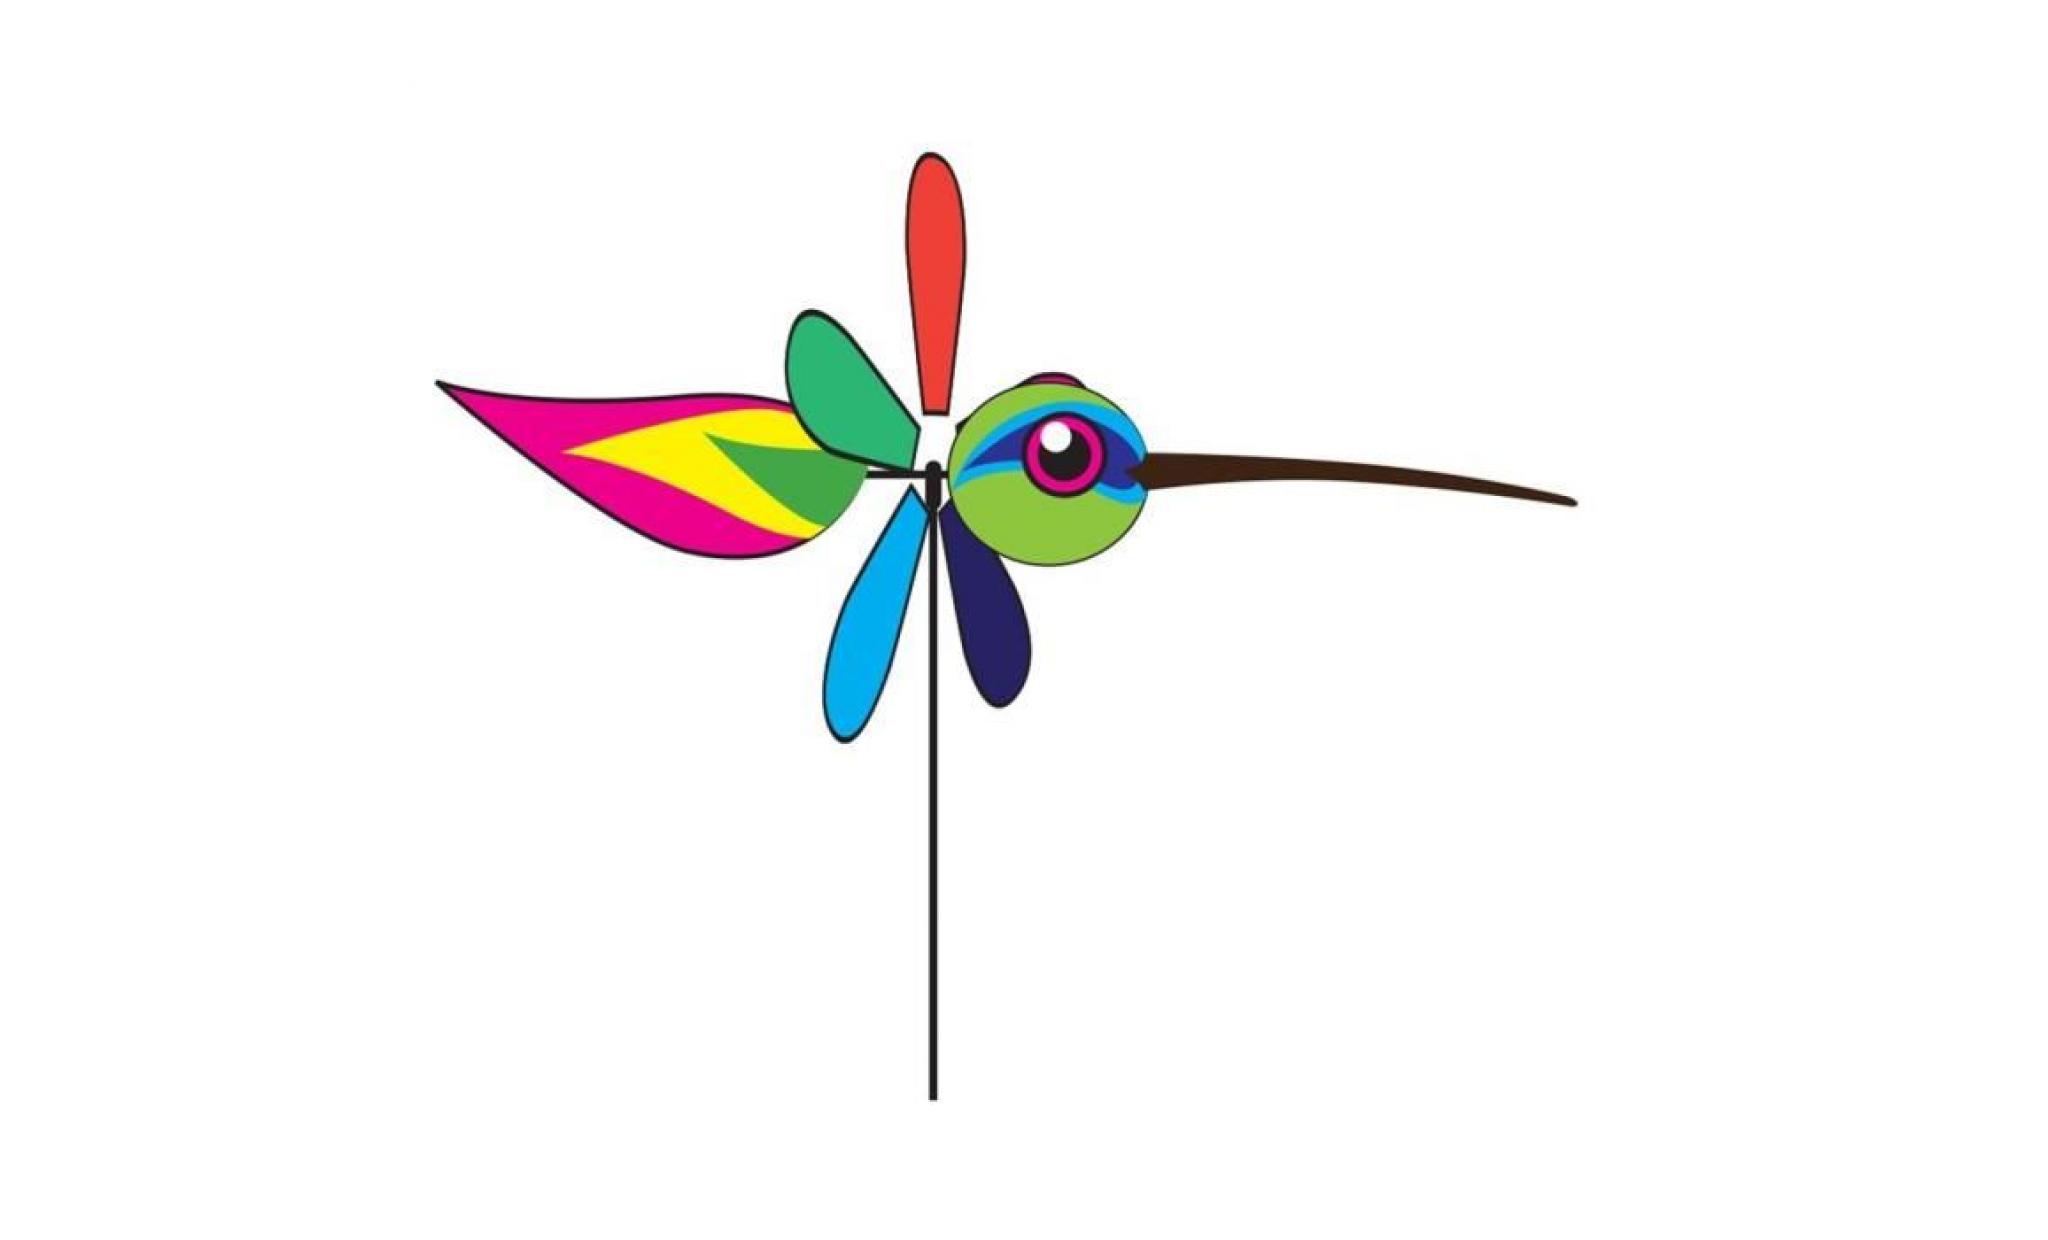 elliot moulin à vent rotor colibri